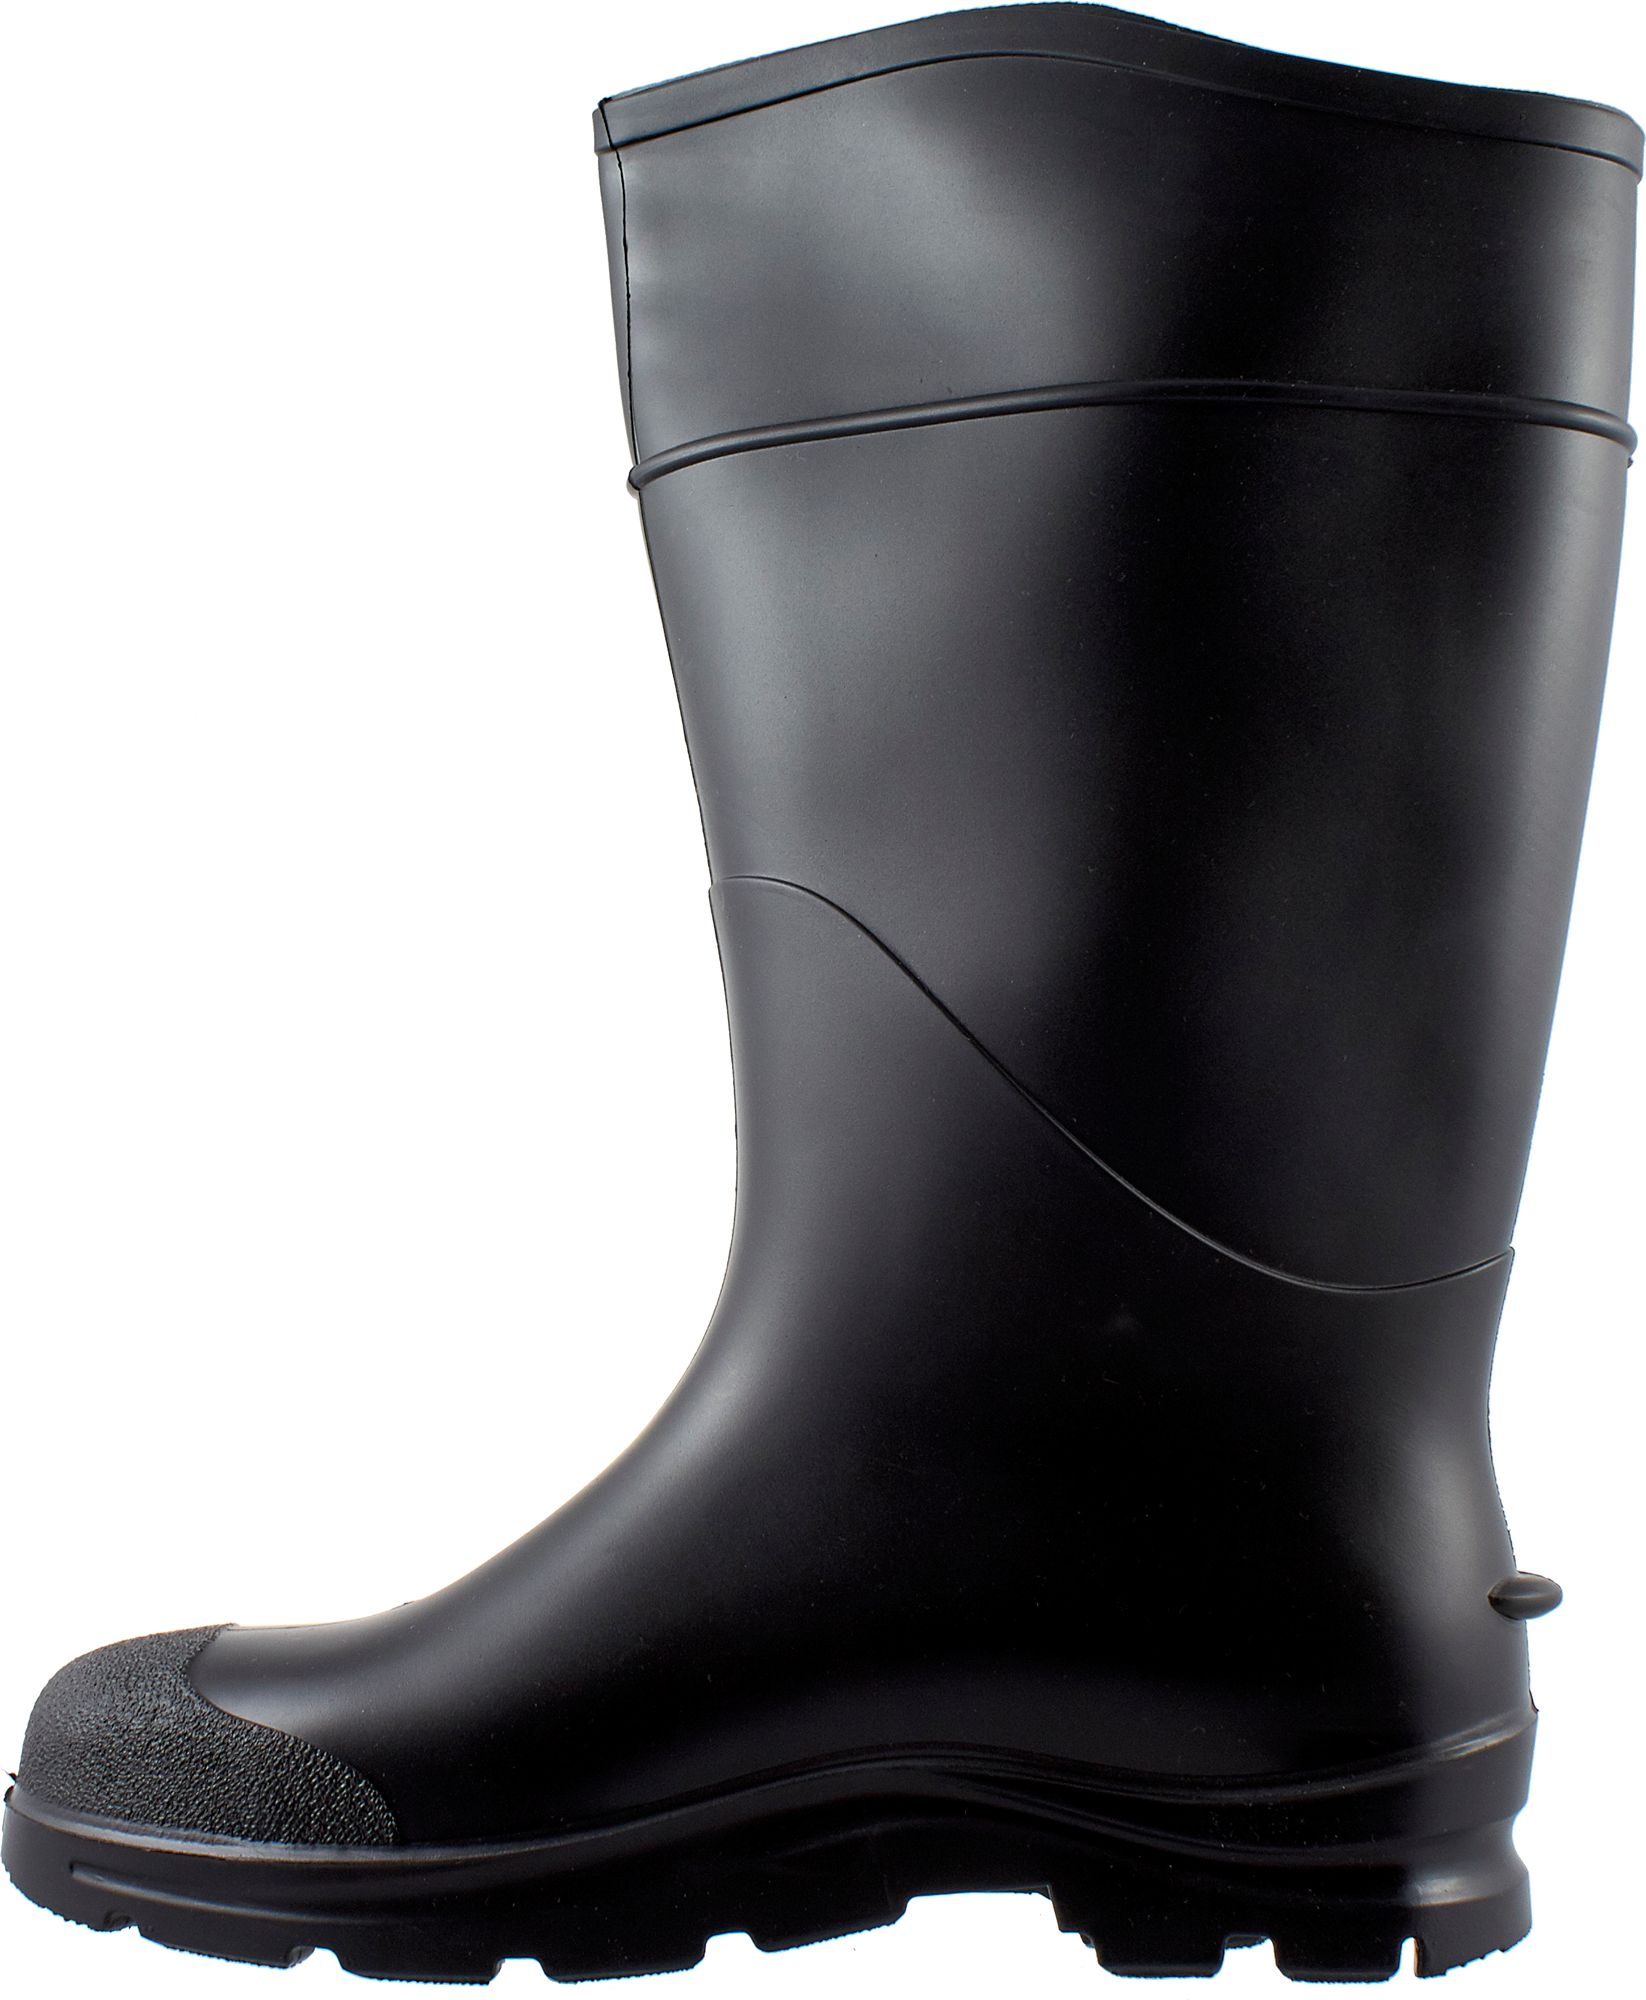 servus men's rubber boots